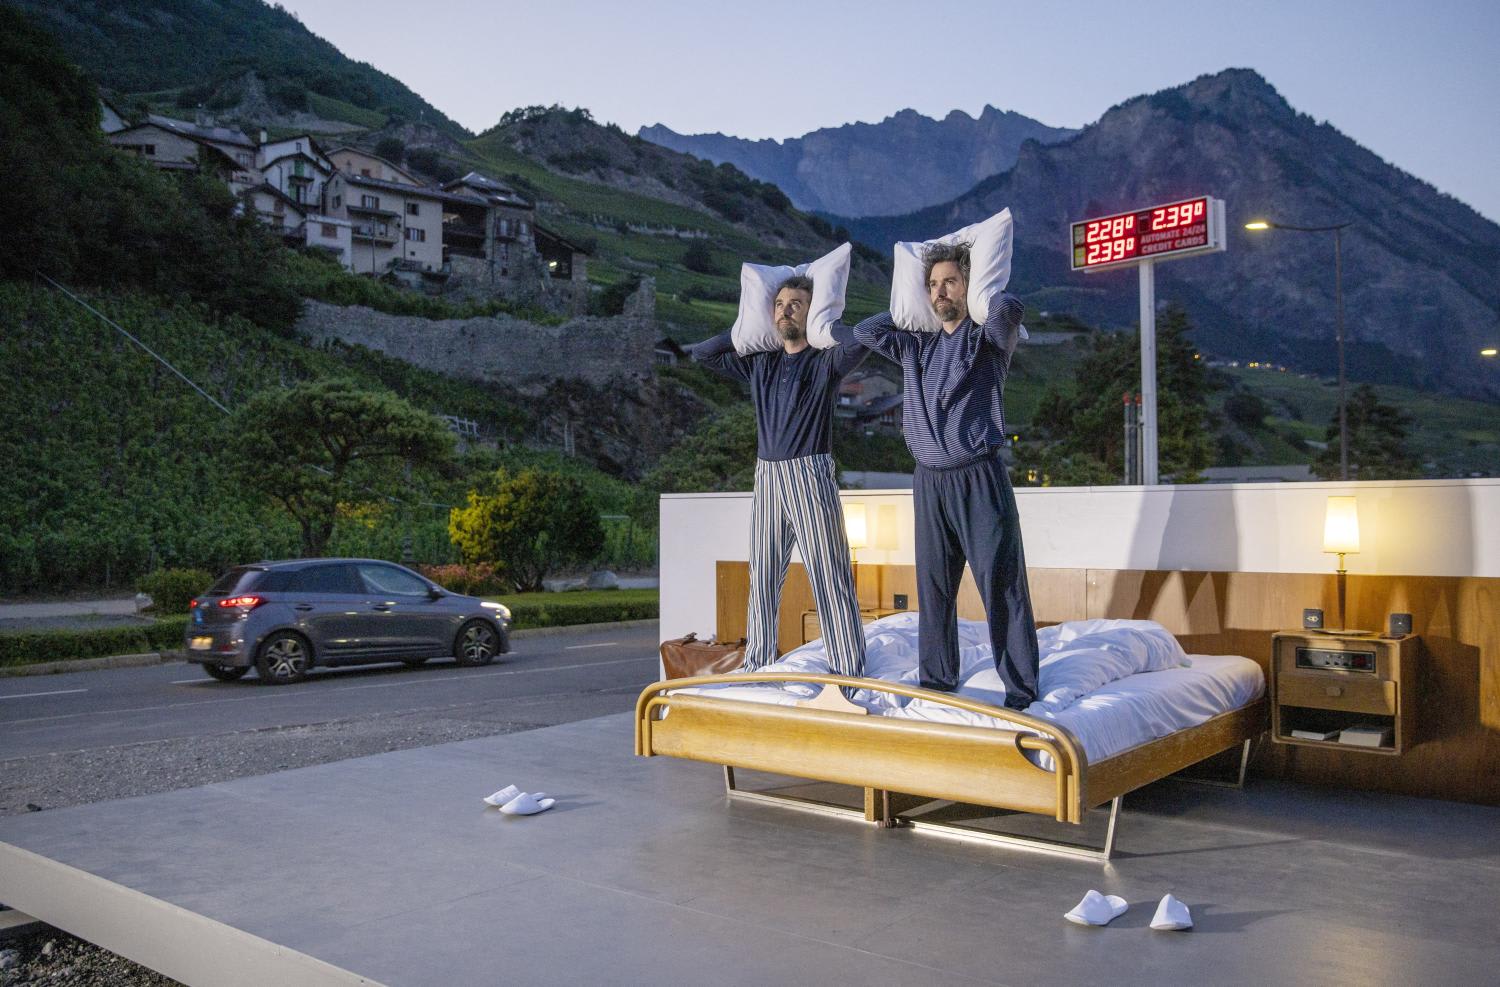 Swiss 'zero star hotel' offers sleepless nights to ponder world's crises